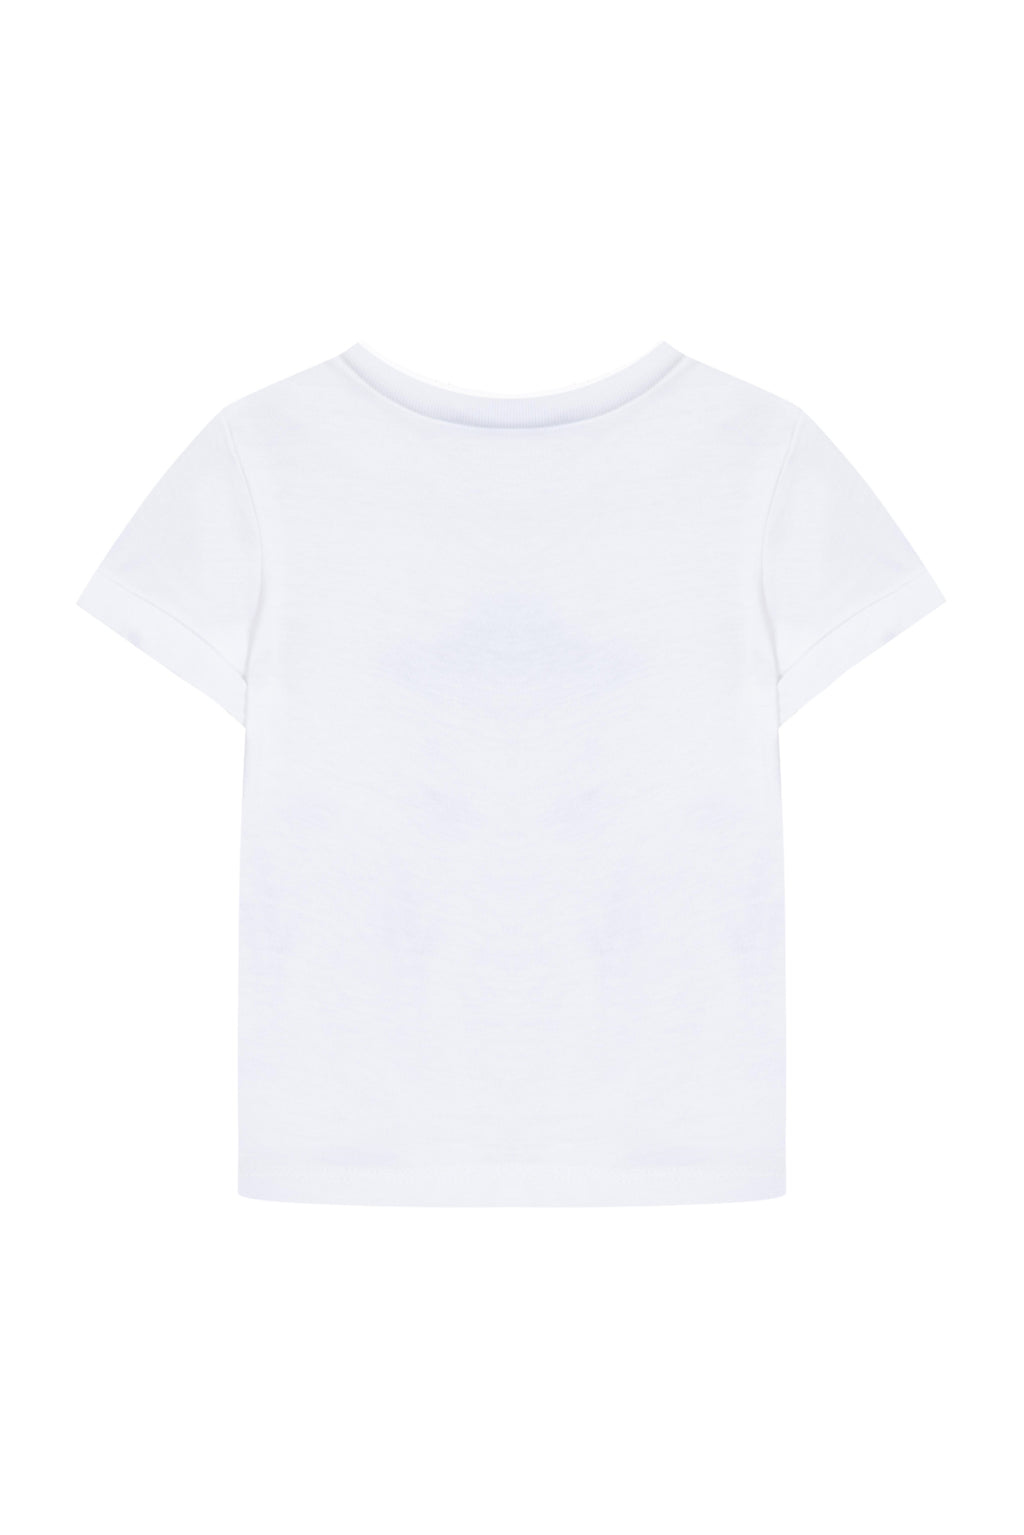 T-shirt - Blanc  illustration animaux sauvages